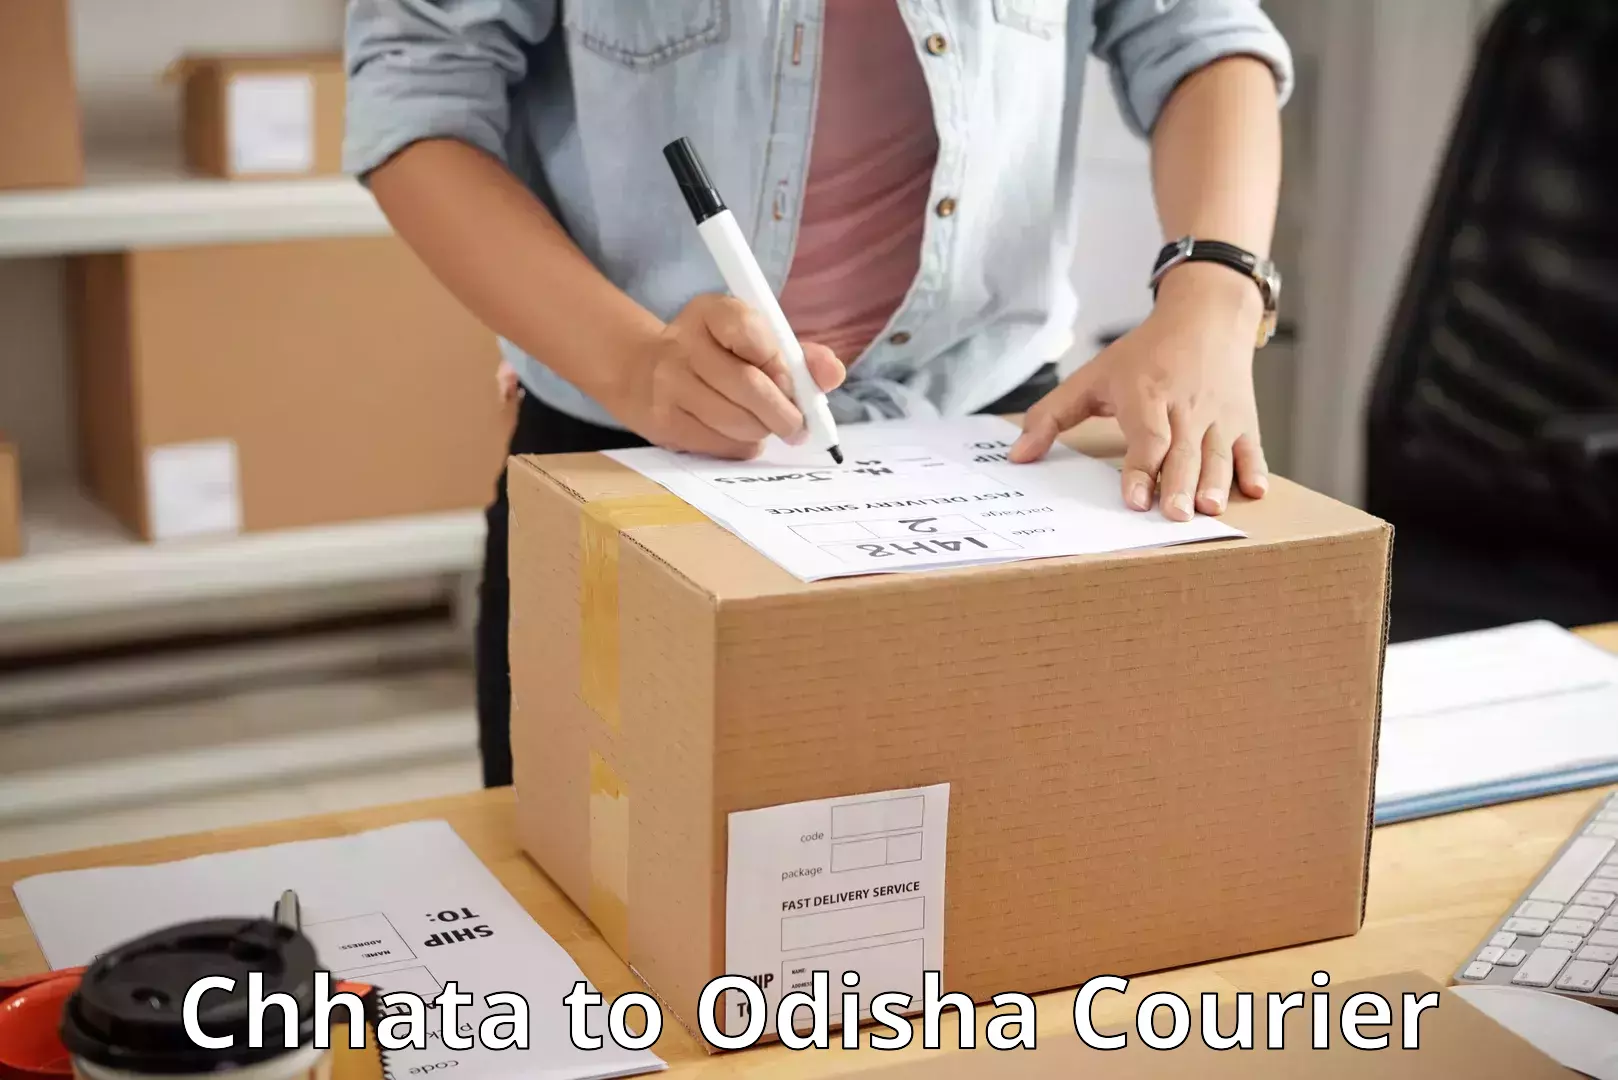 Cash on delivery service Chhata to Odisha